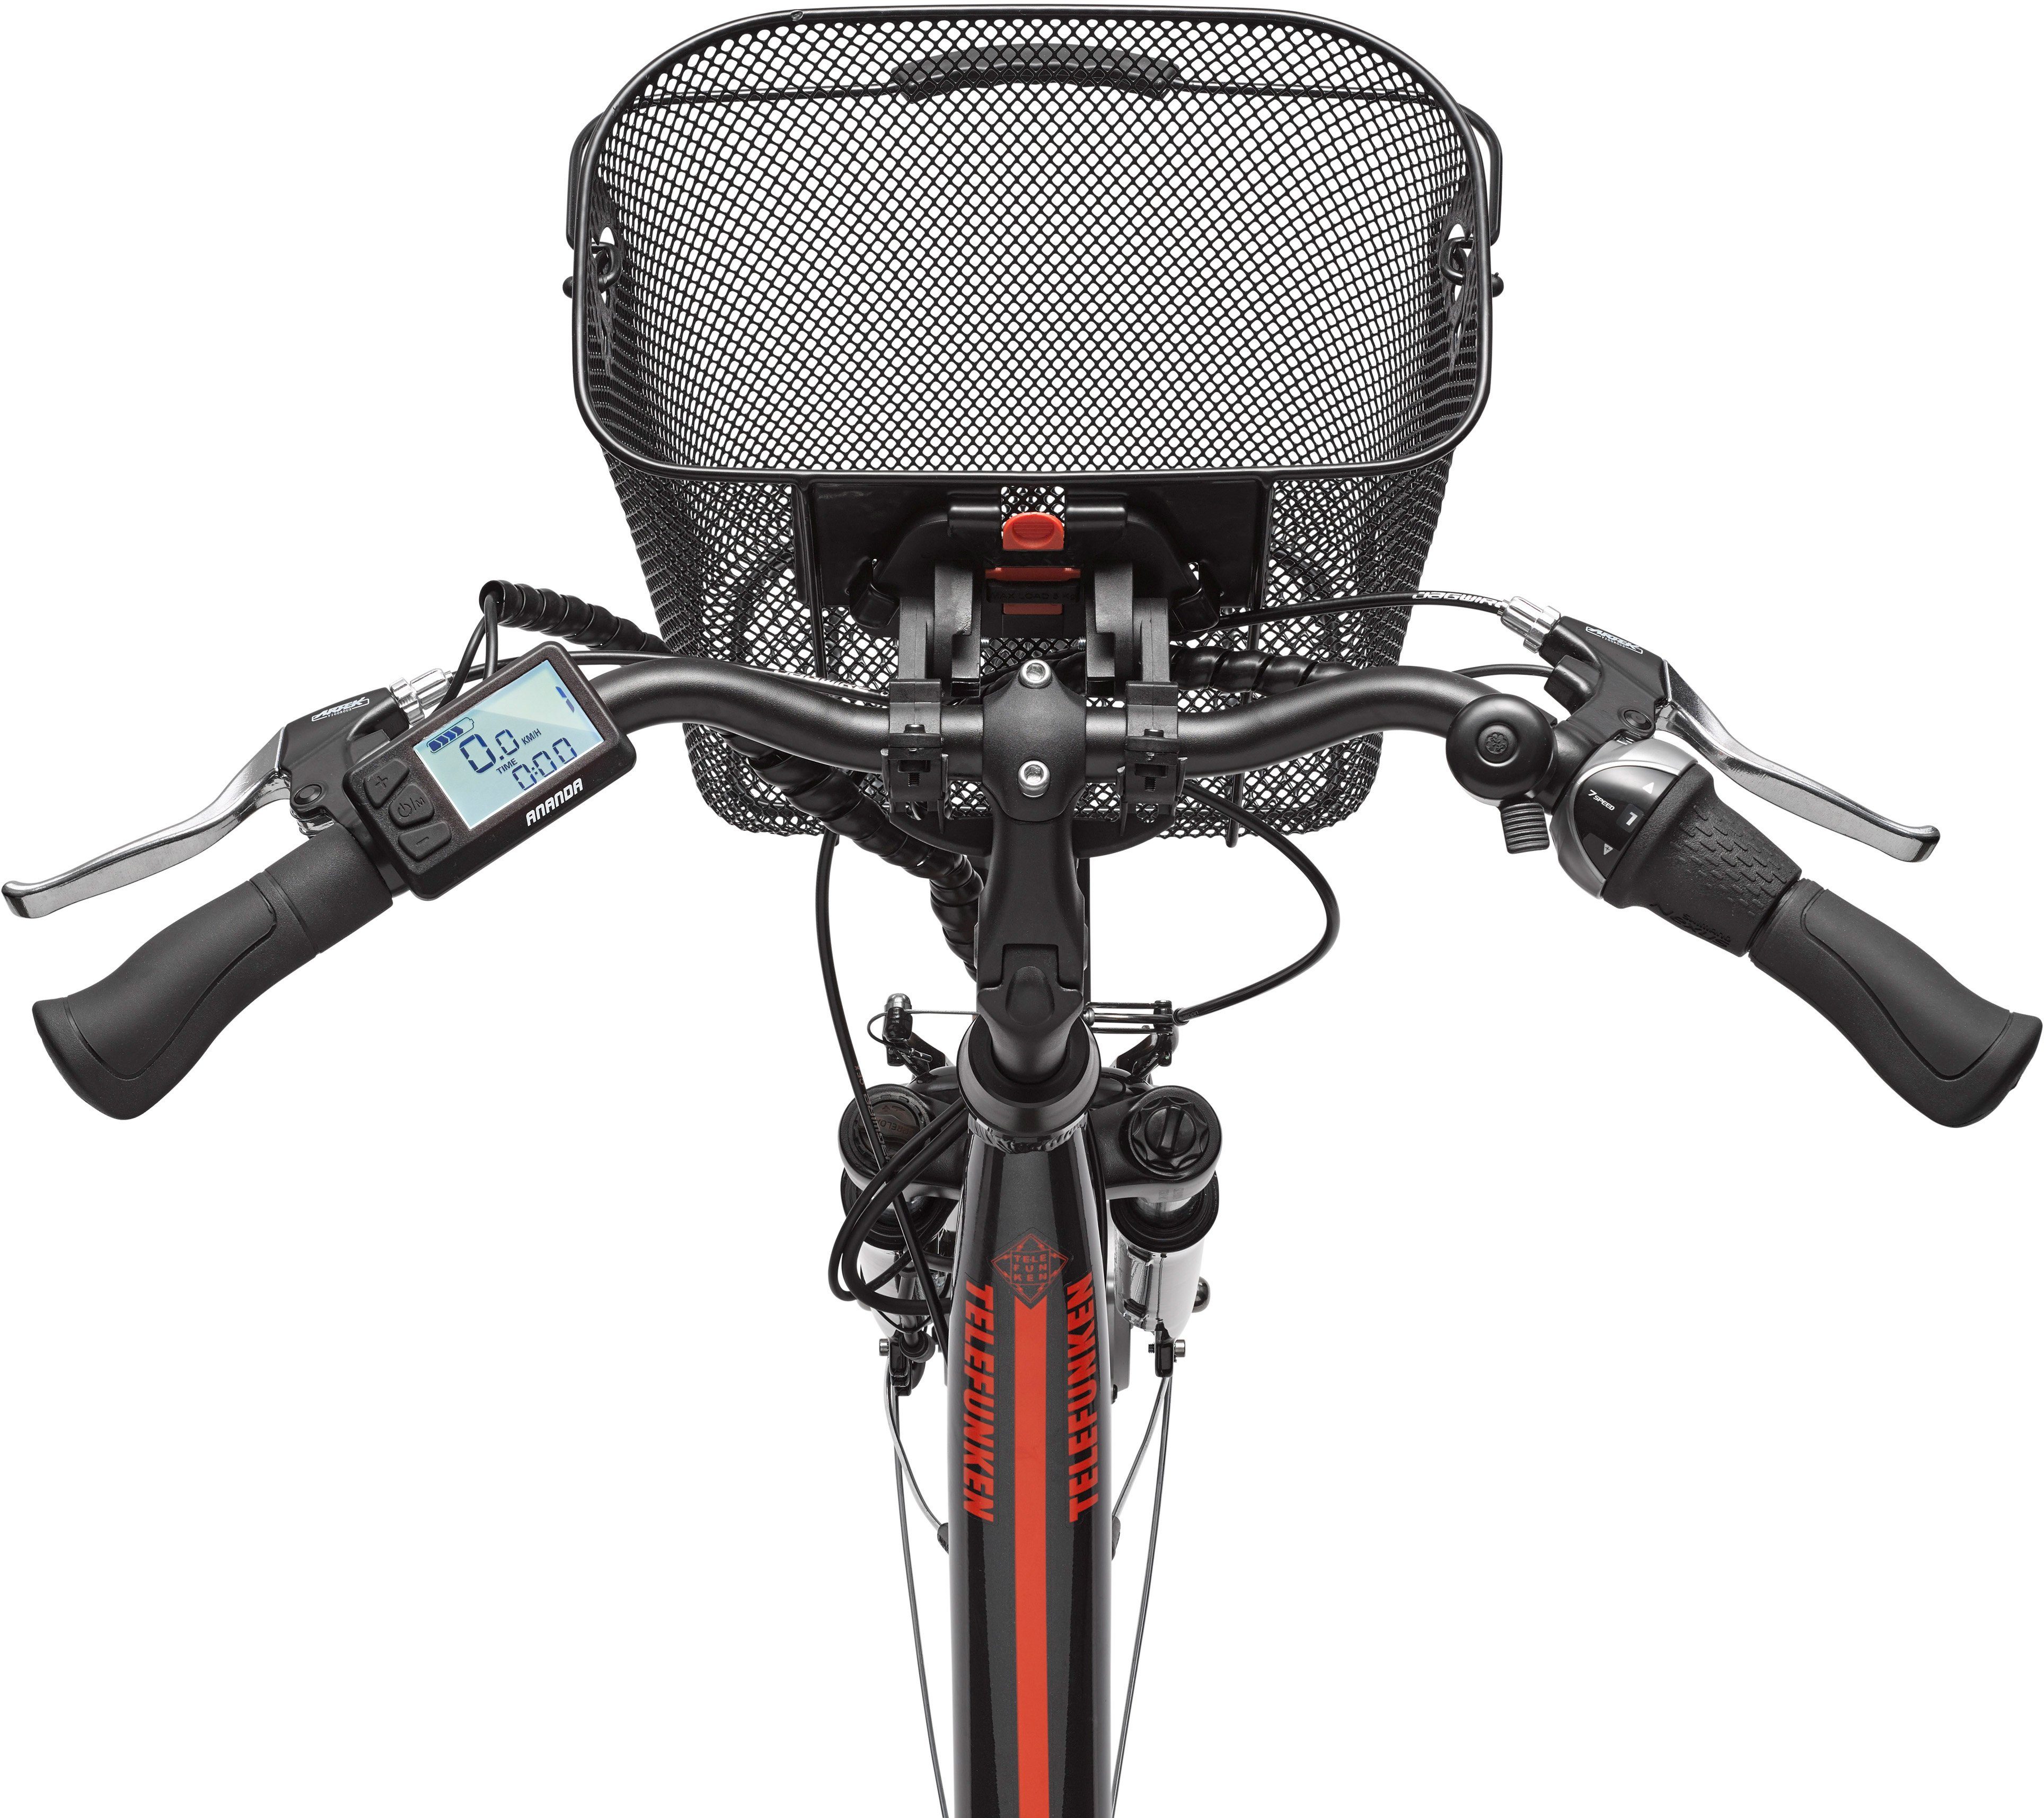 Shimano abnehmbarem RC657 7 Multitalent, E-Bike Gang Einkaufs-Fahrradkorb Wh 468 Telefunken mit Nabenschaltung, Frontmotor, Schaltwerk, Batterie, Nexus